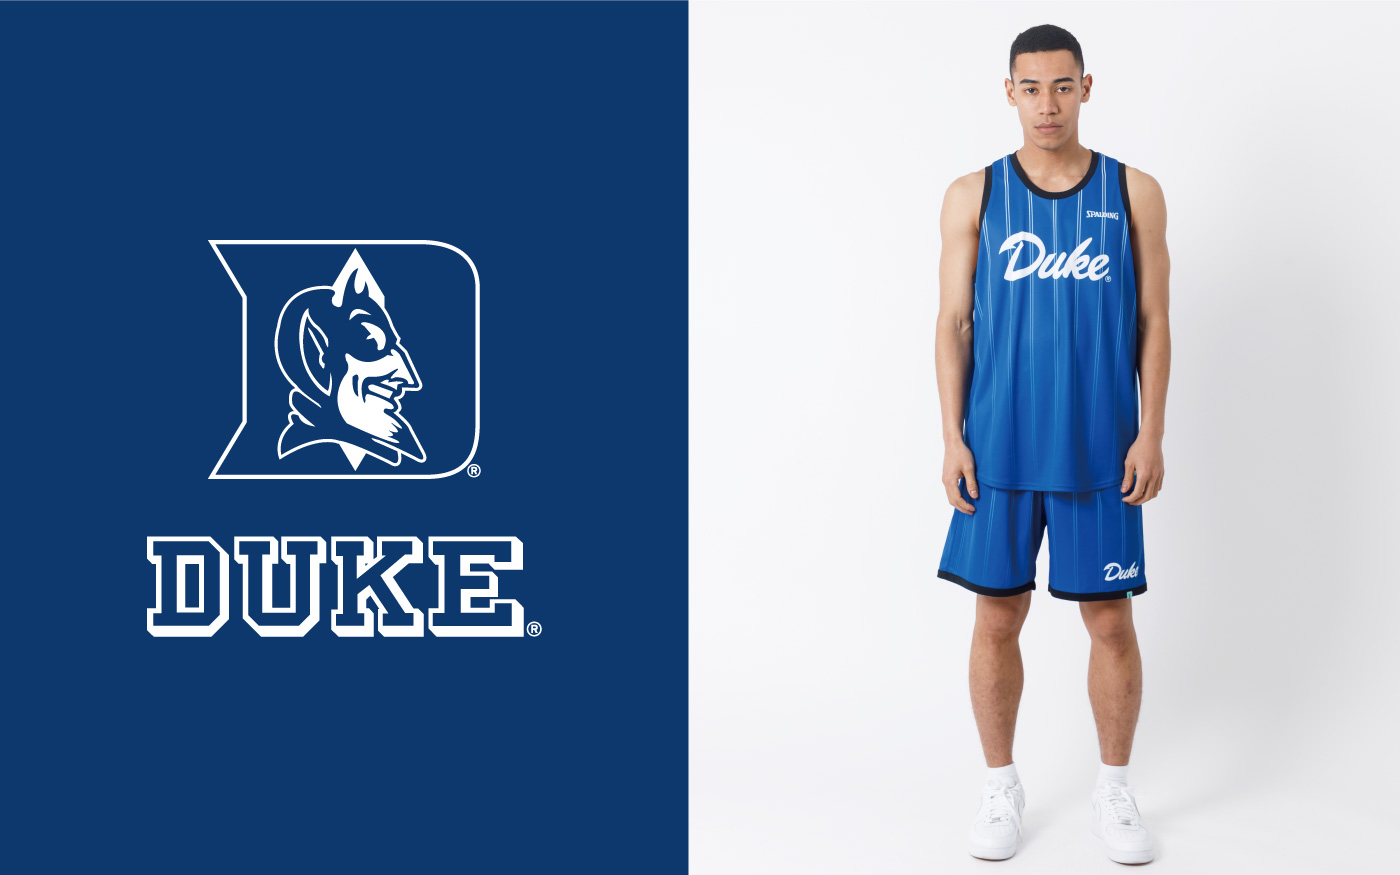 DUKEアメリカを代表するバスケットボールの名門校デューク大学との 